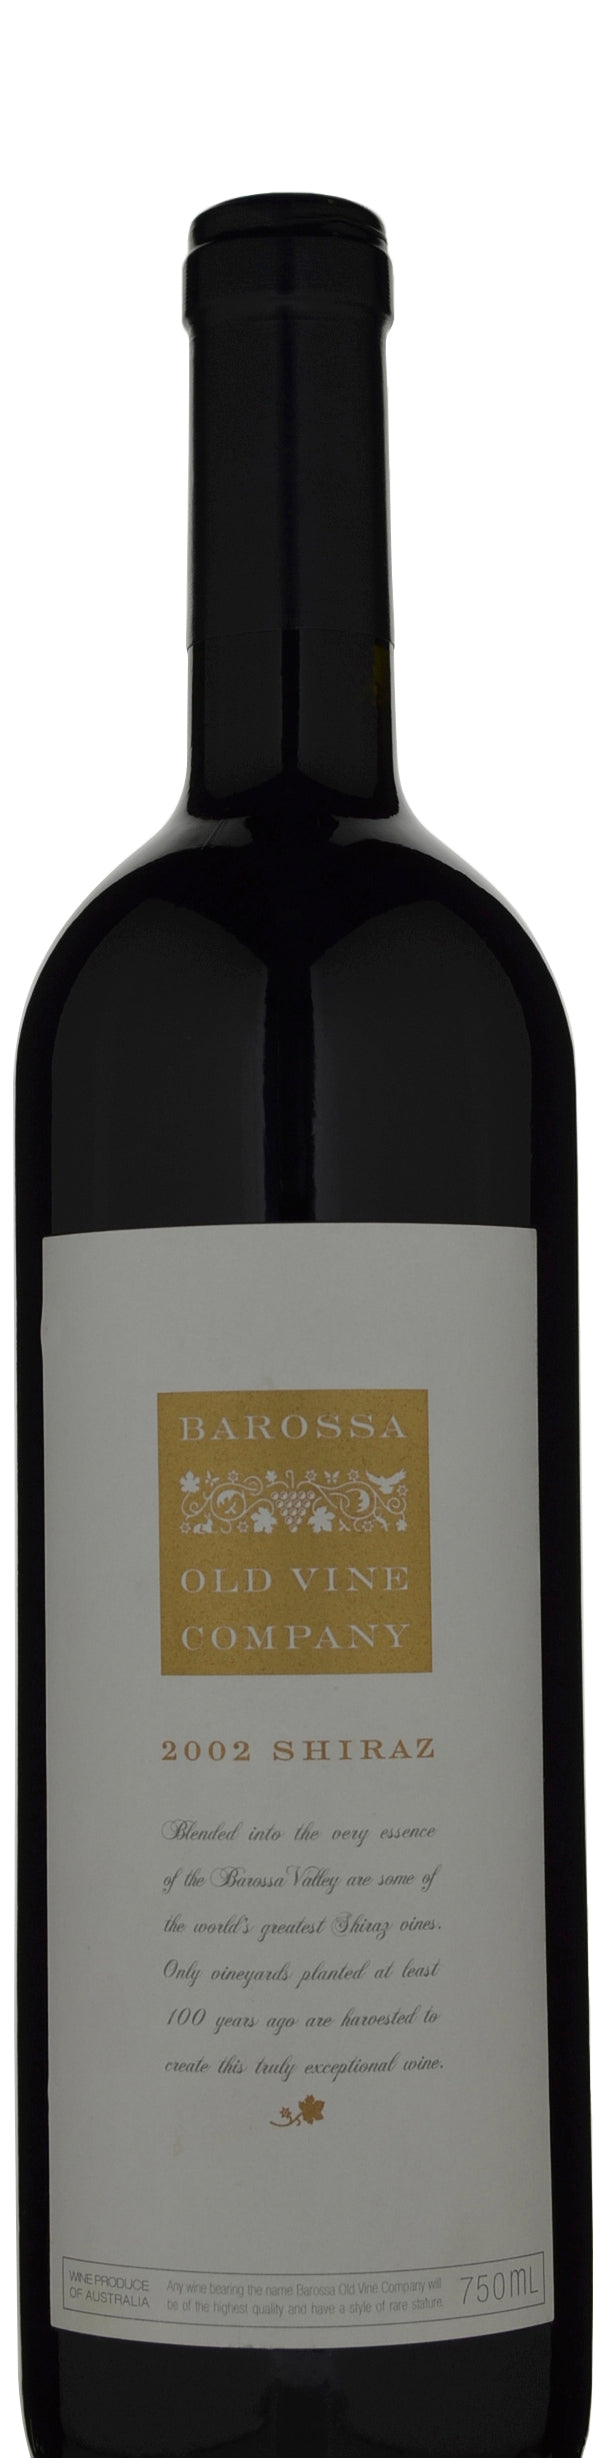 Barossa Old Vine Company Shiraz 2002